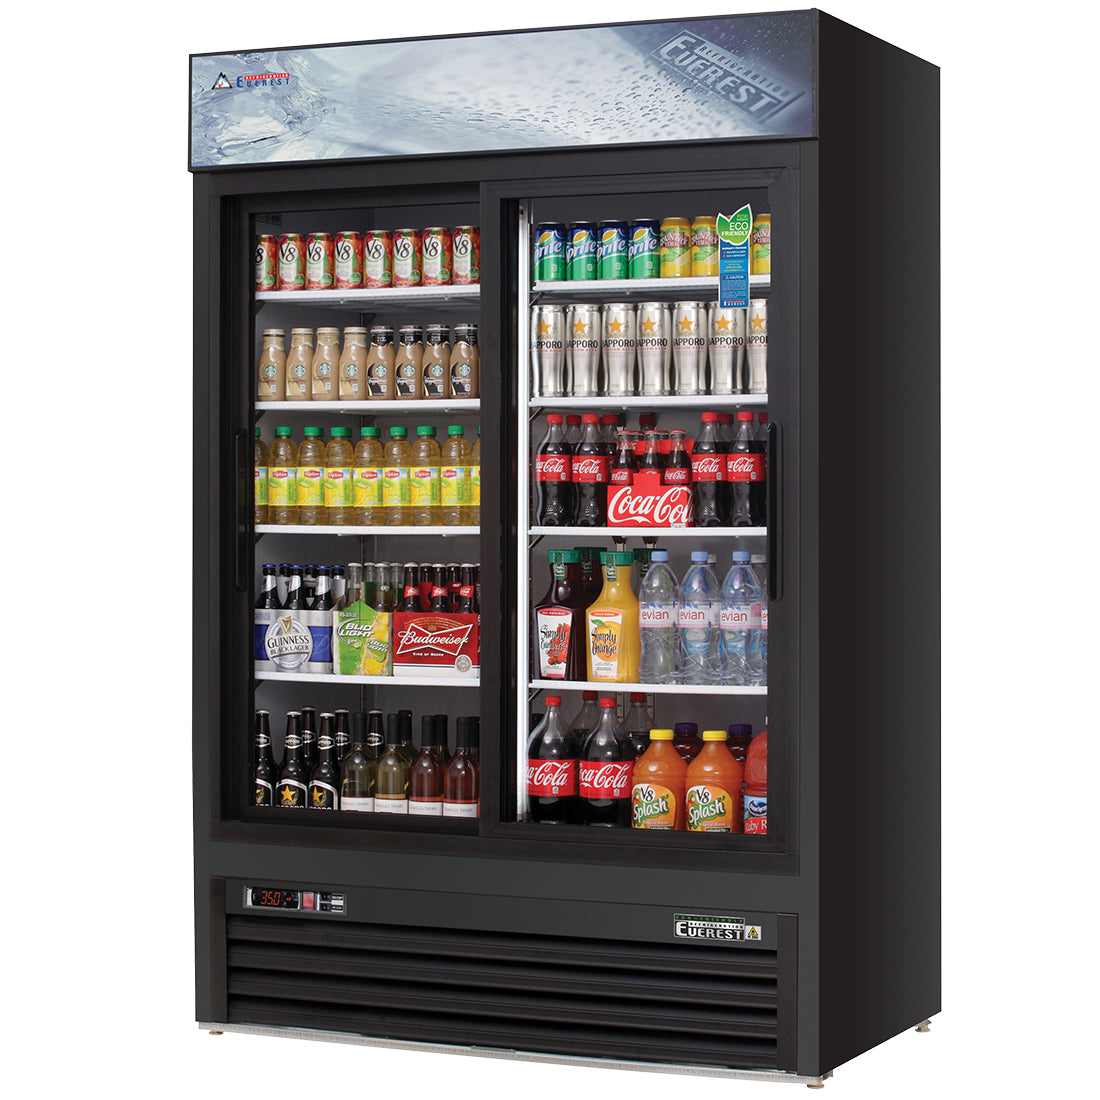 Everest 2 Door Refrigerator Merchandiser (Sliding), 48 cu ft - Black Exterior Model EMGR48B